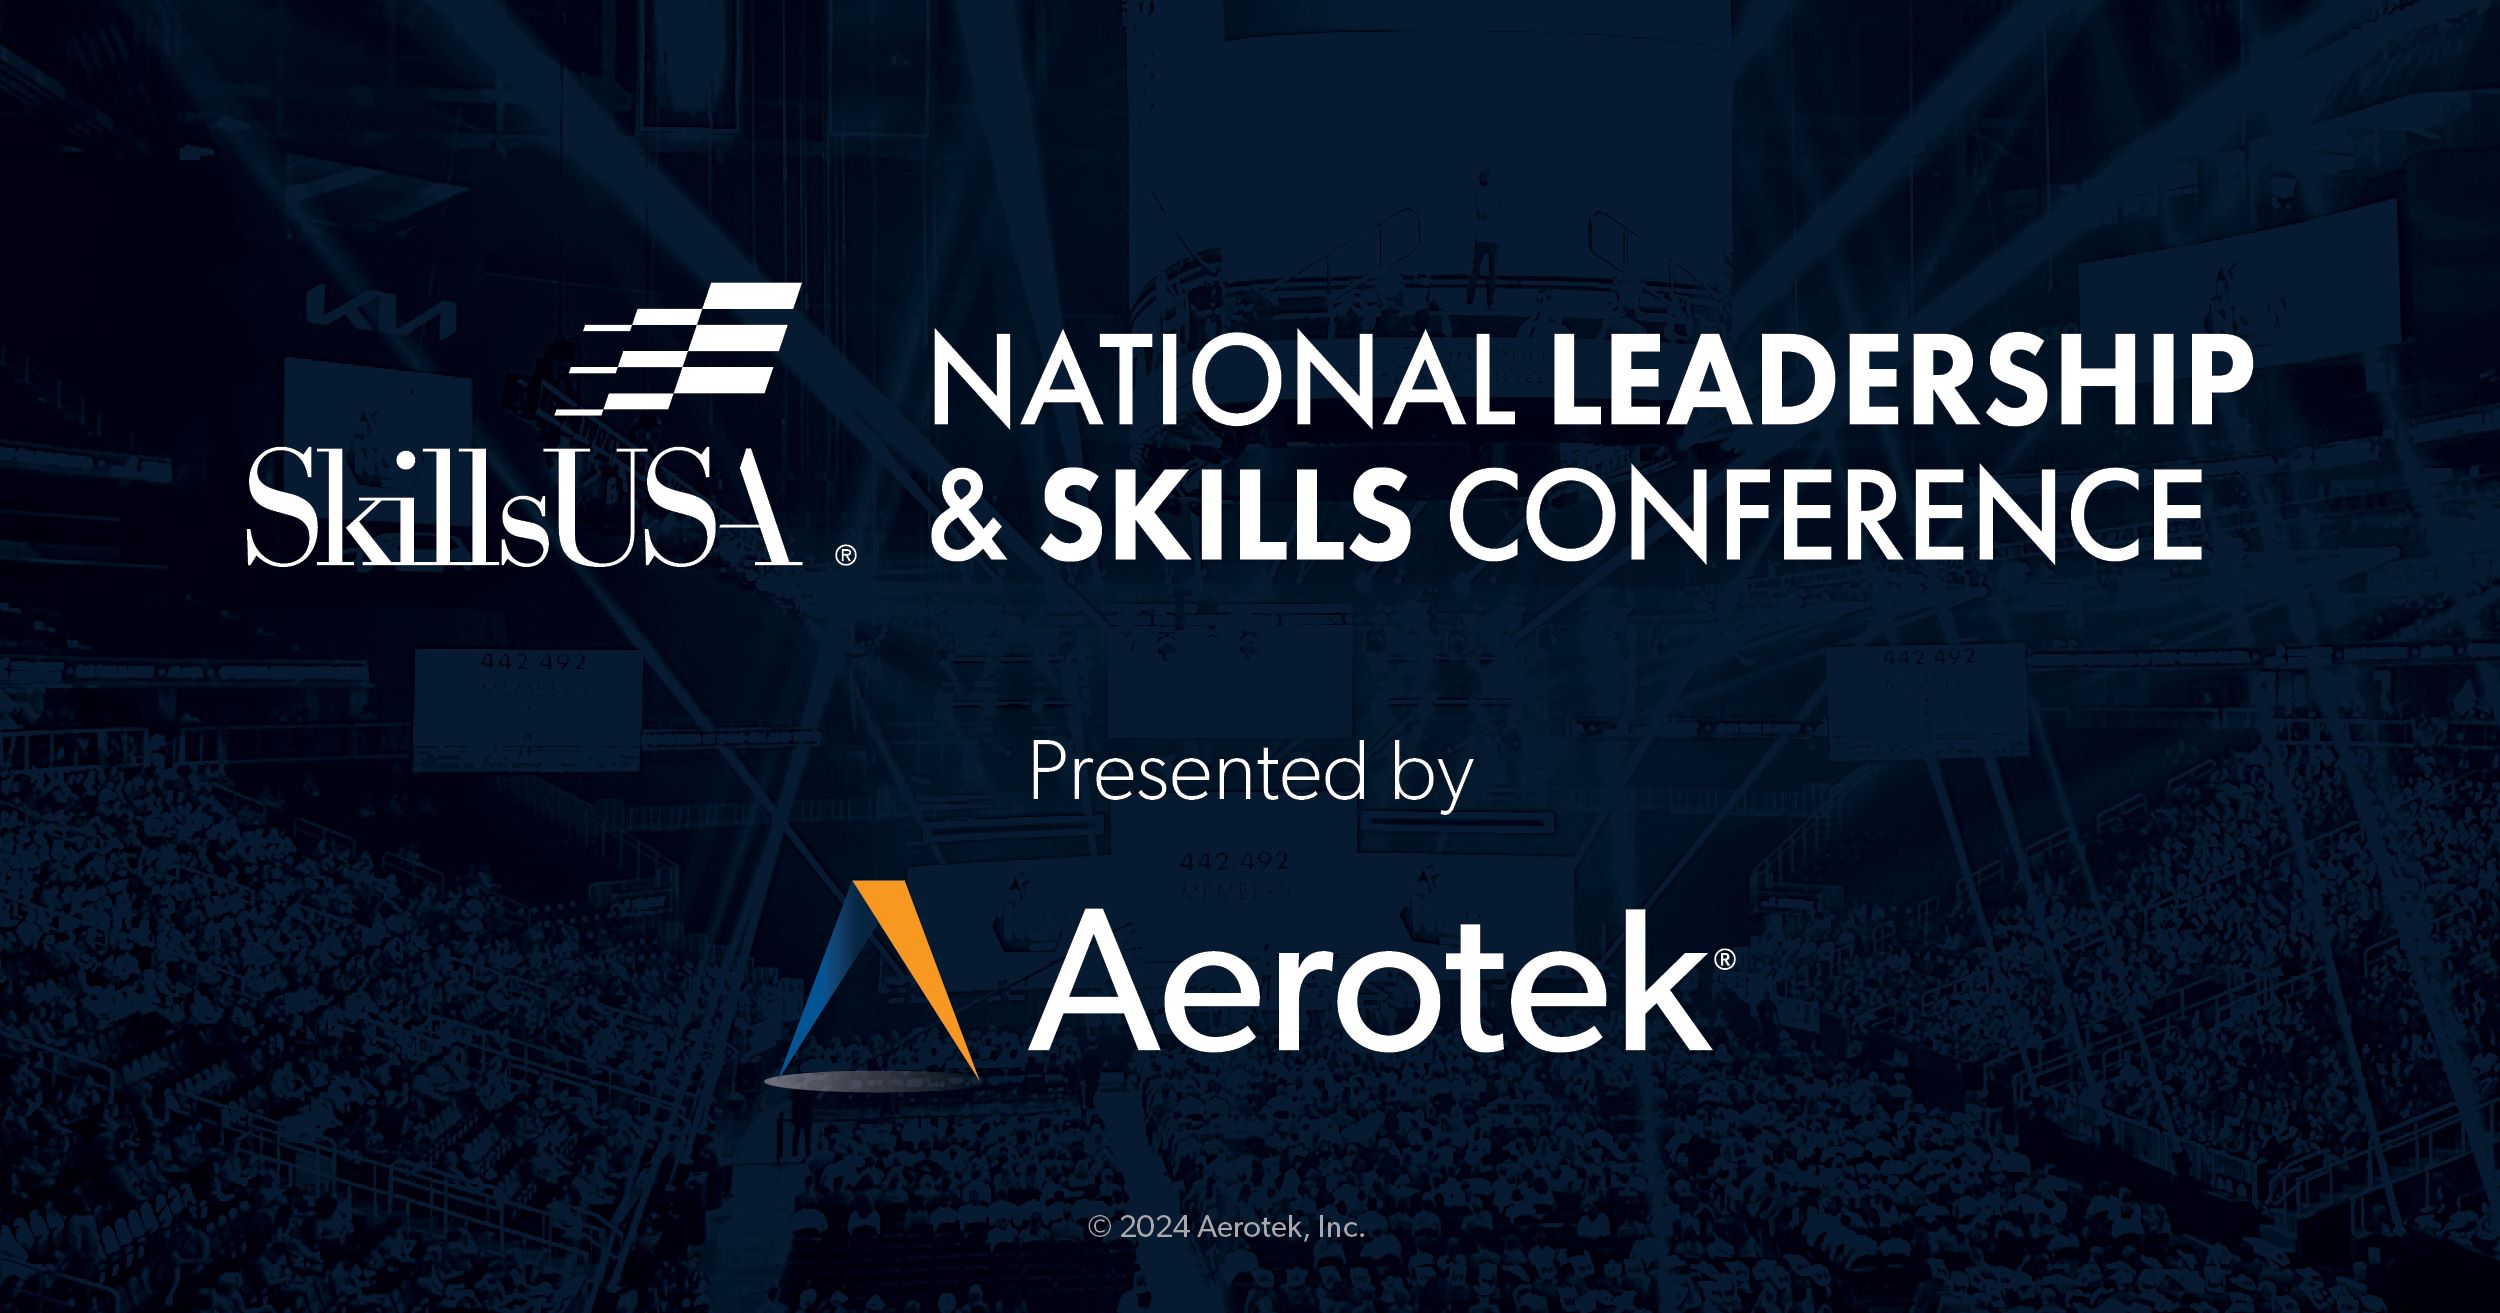 SkillsUSA National Leadership & Skills Conference presented by Aerotek